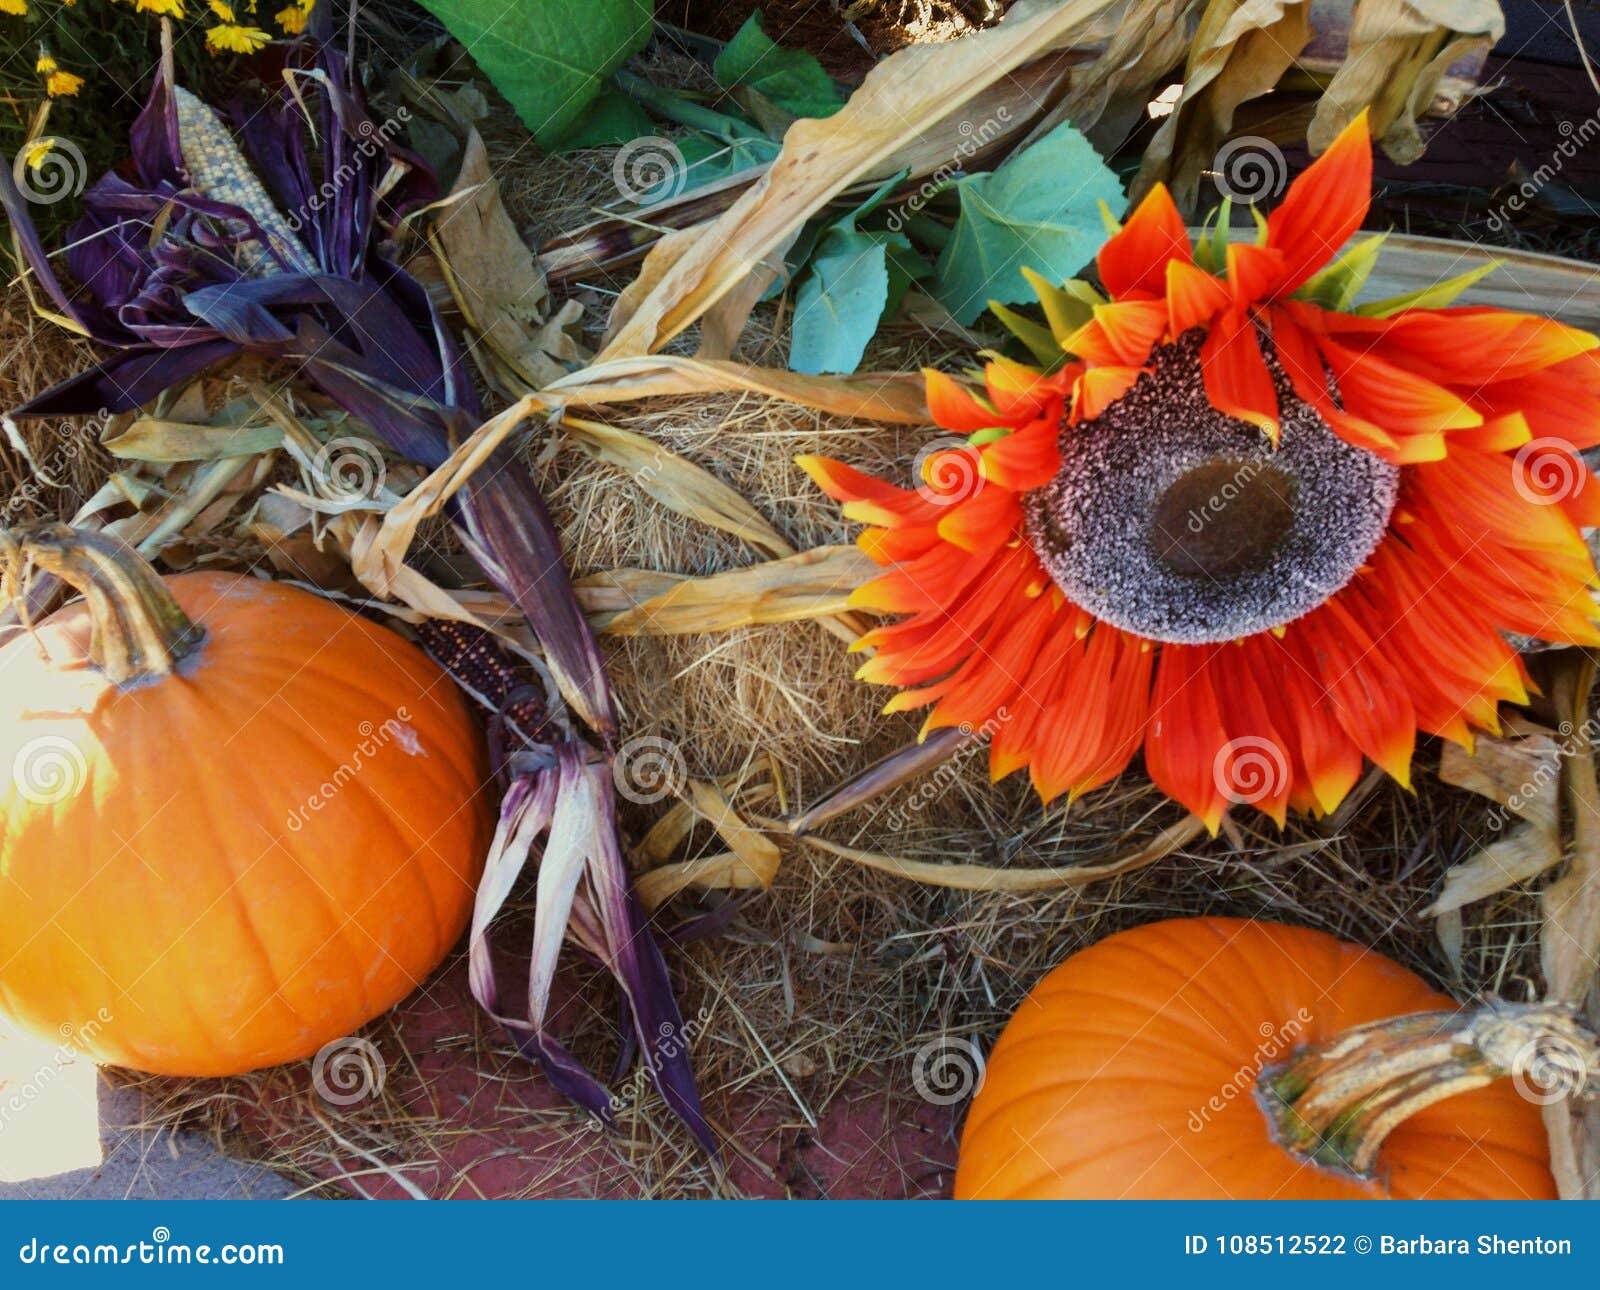 Fall flower stock photo. Image of fall, pumpkins, flowers - 108512522